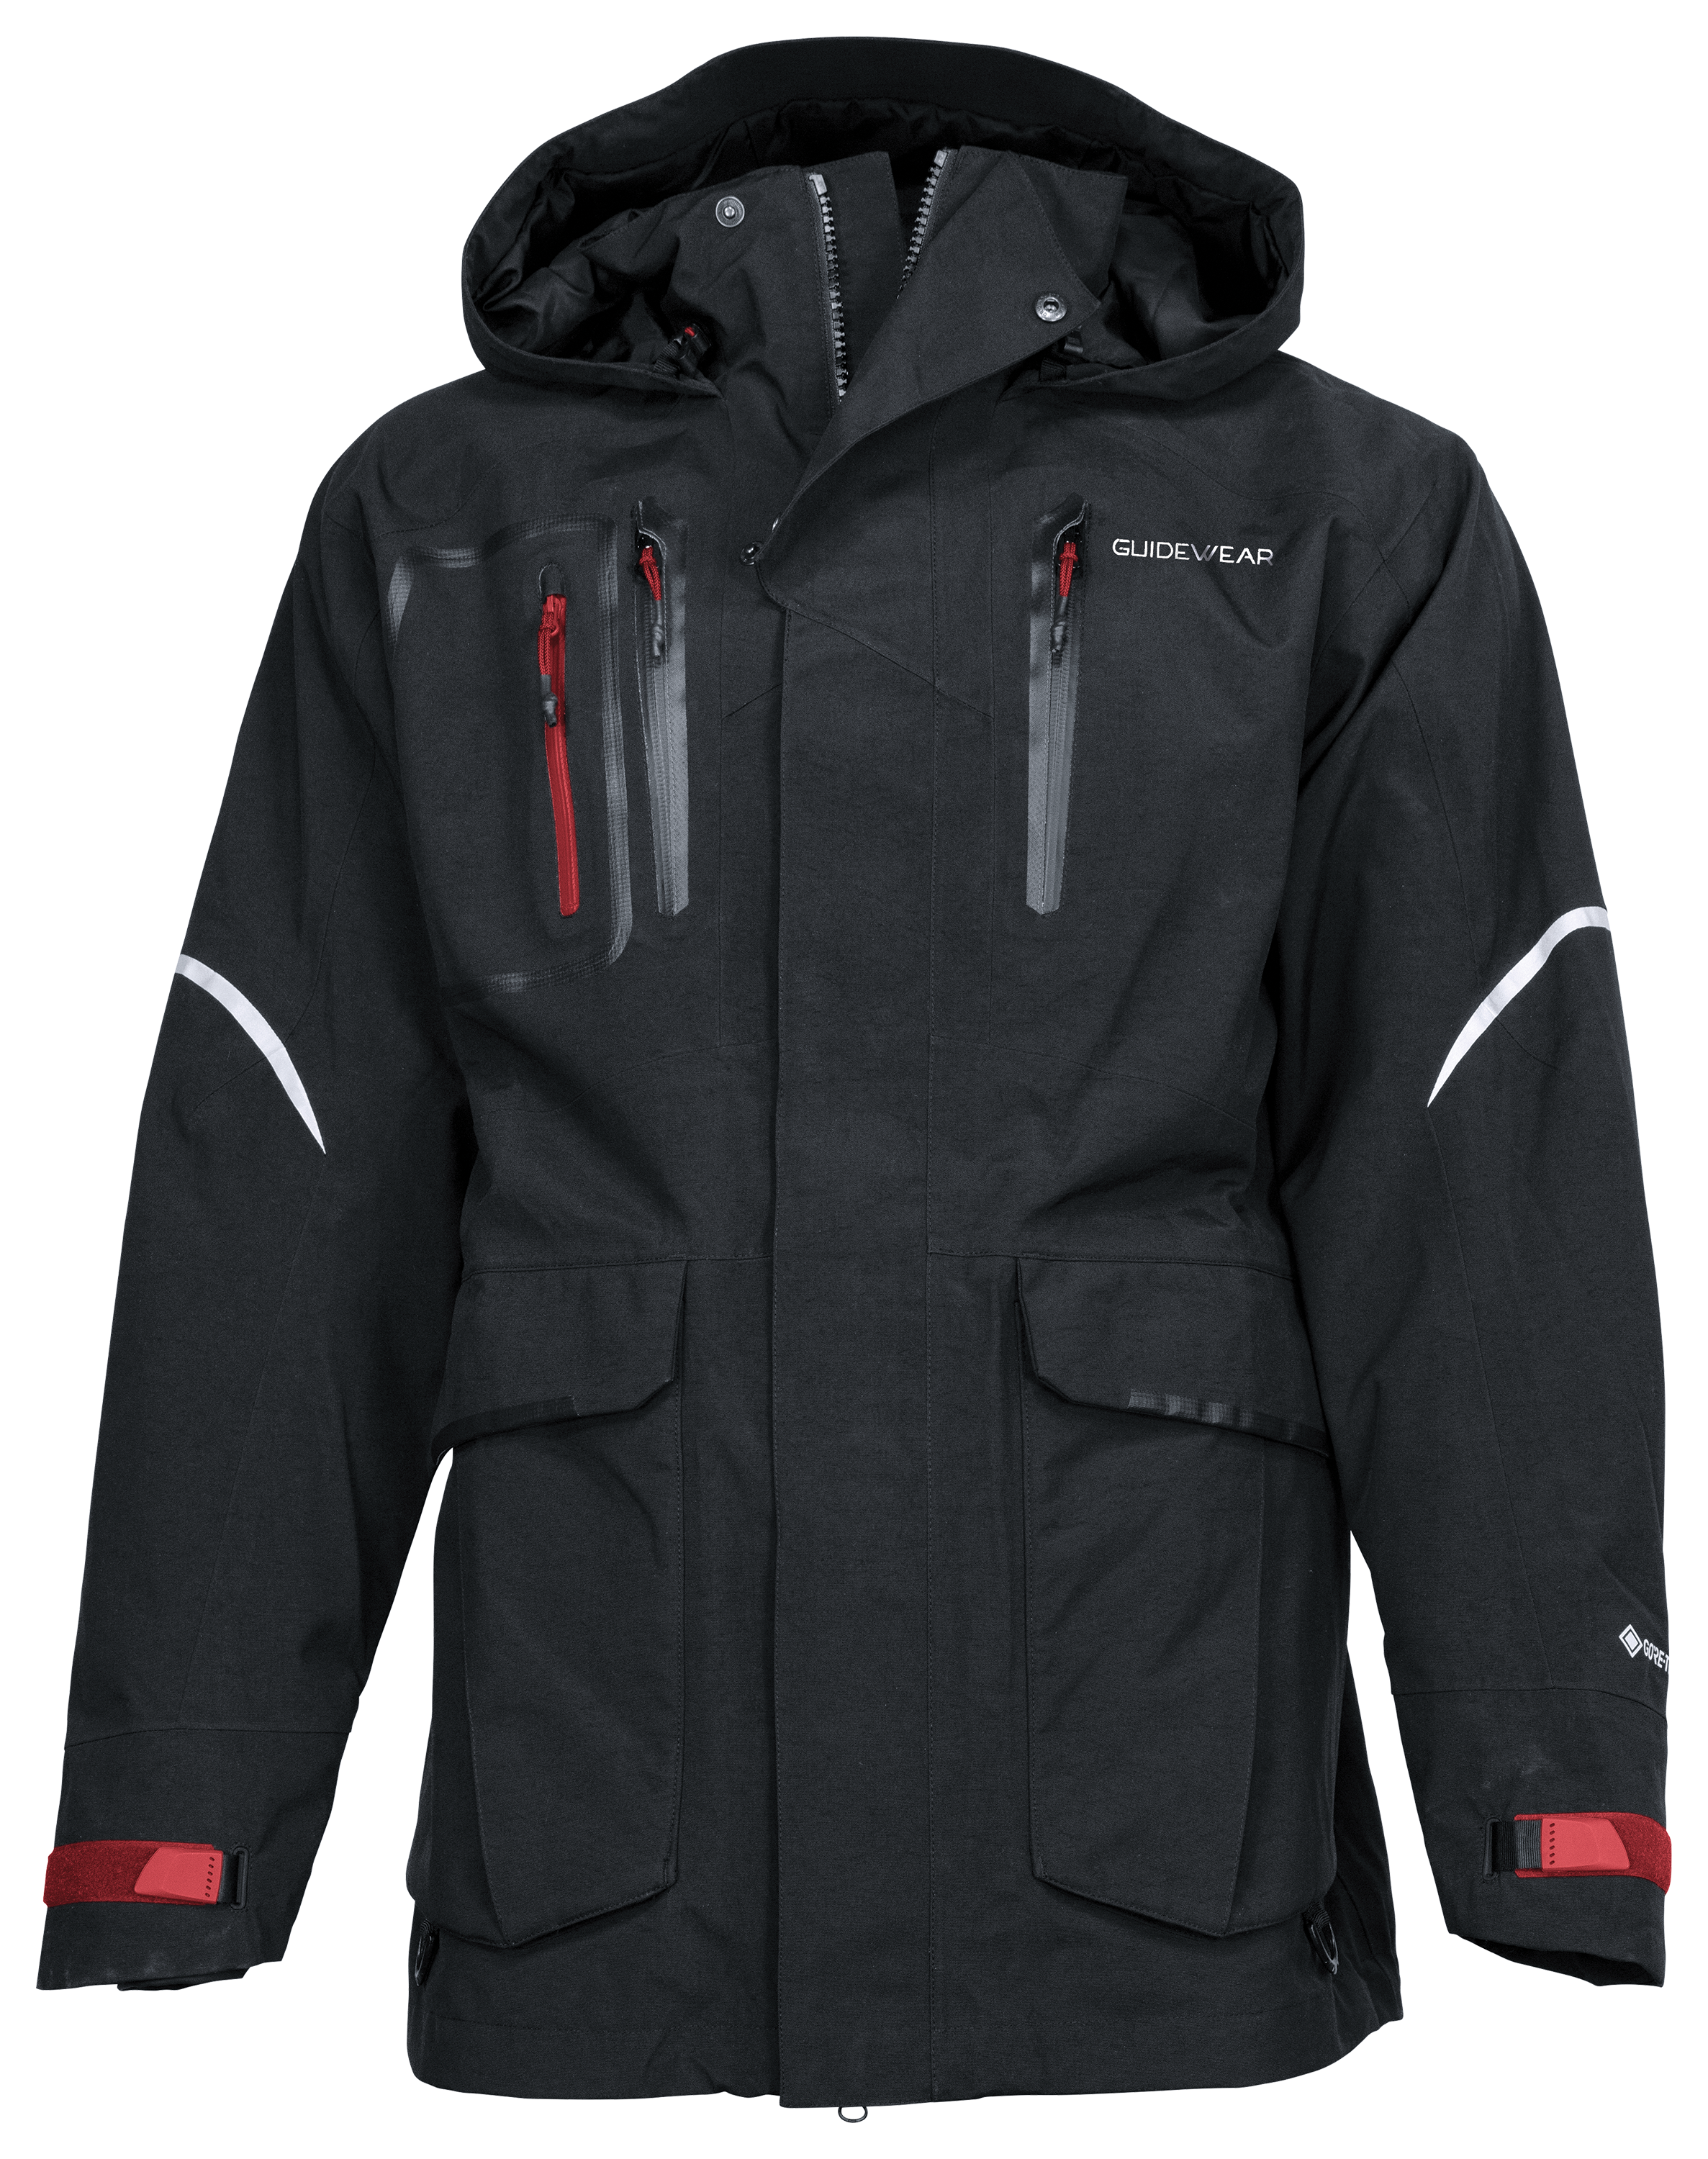 Cabella's Guidewear Xtreme Goretex Jacket, Men, Large Tall – The